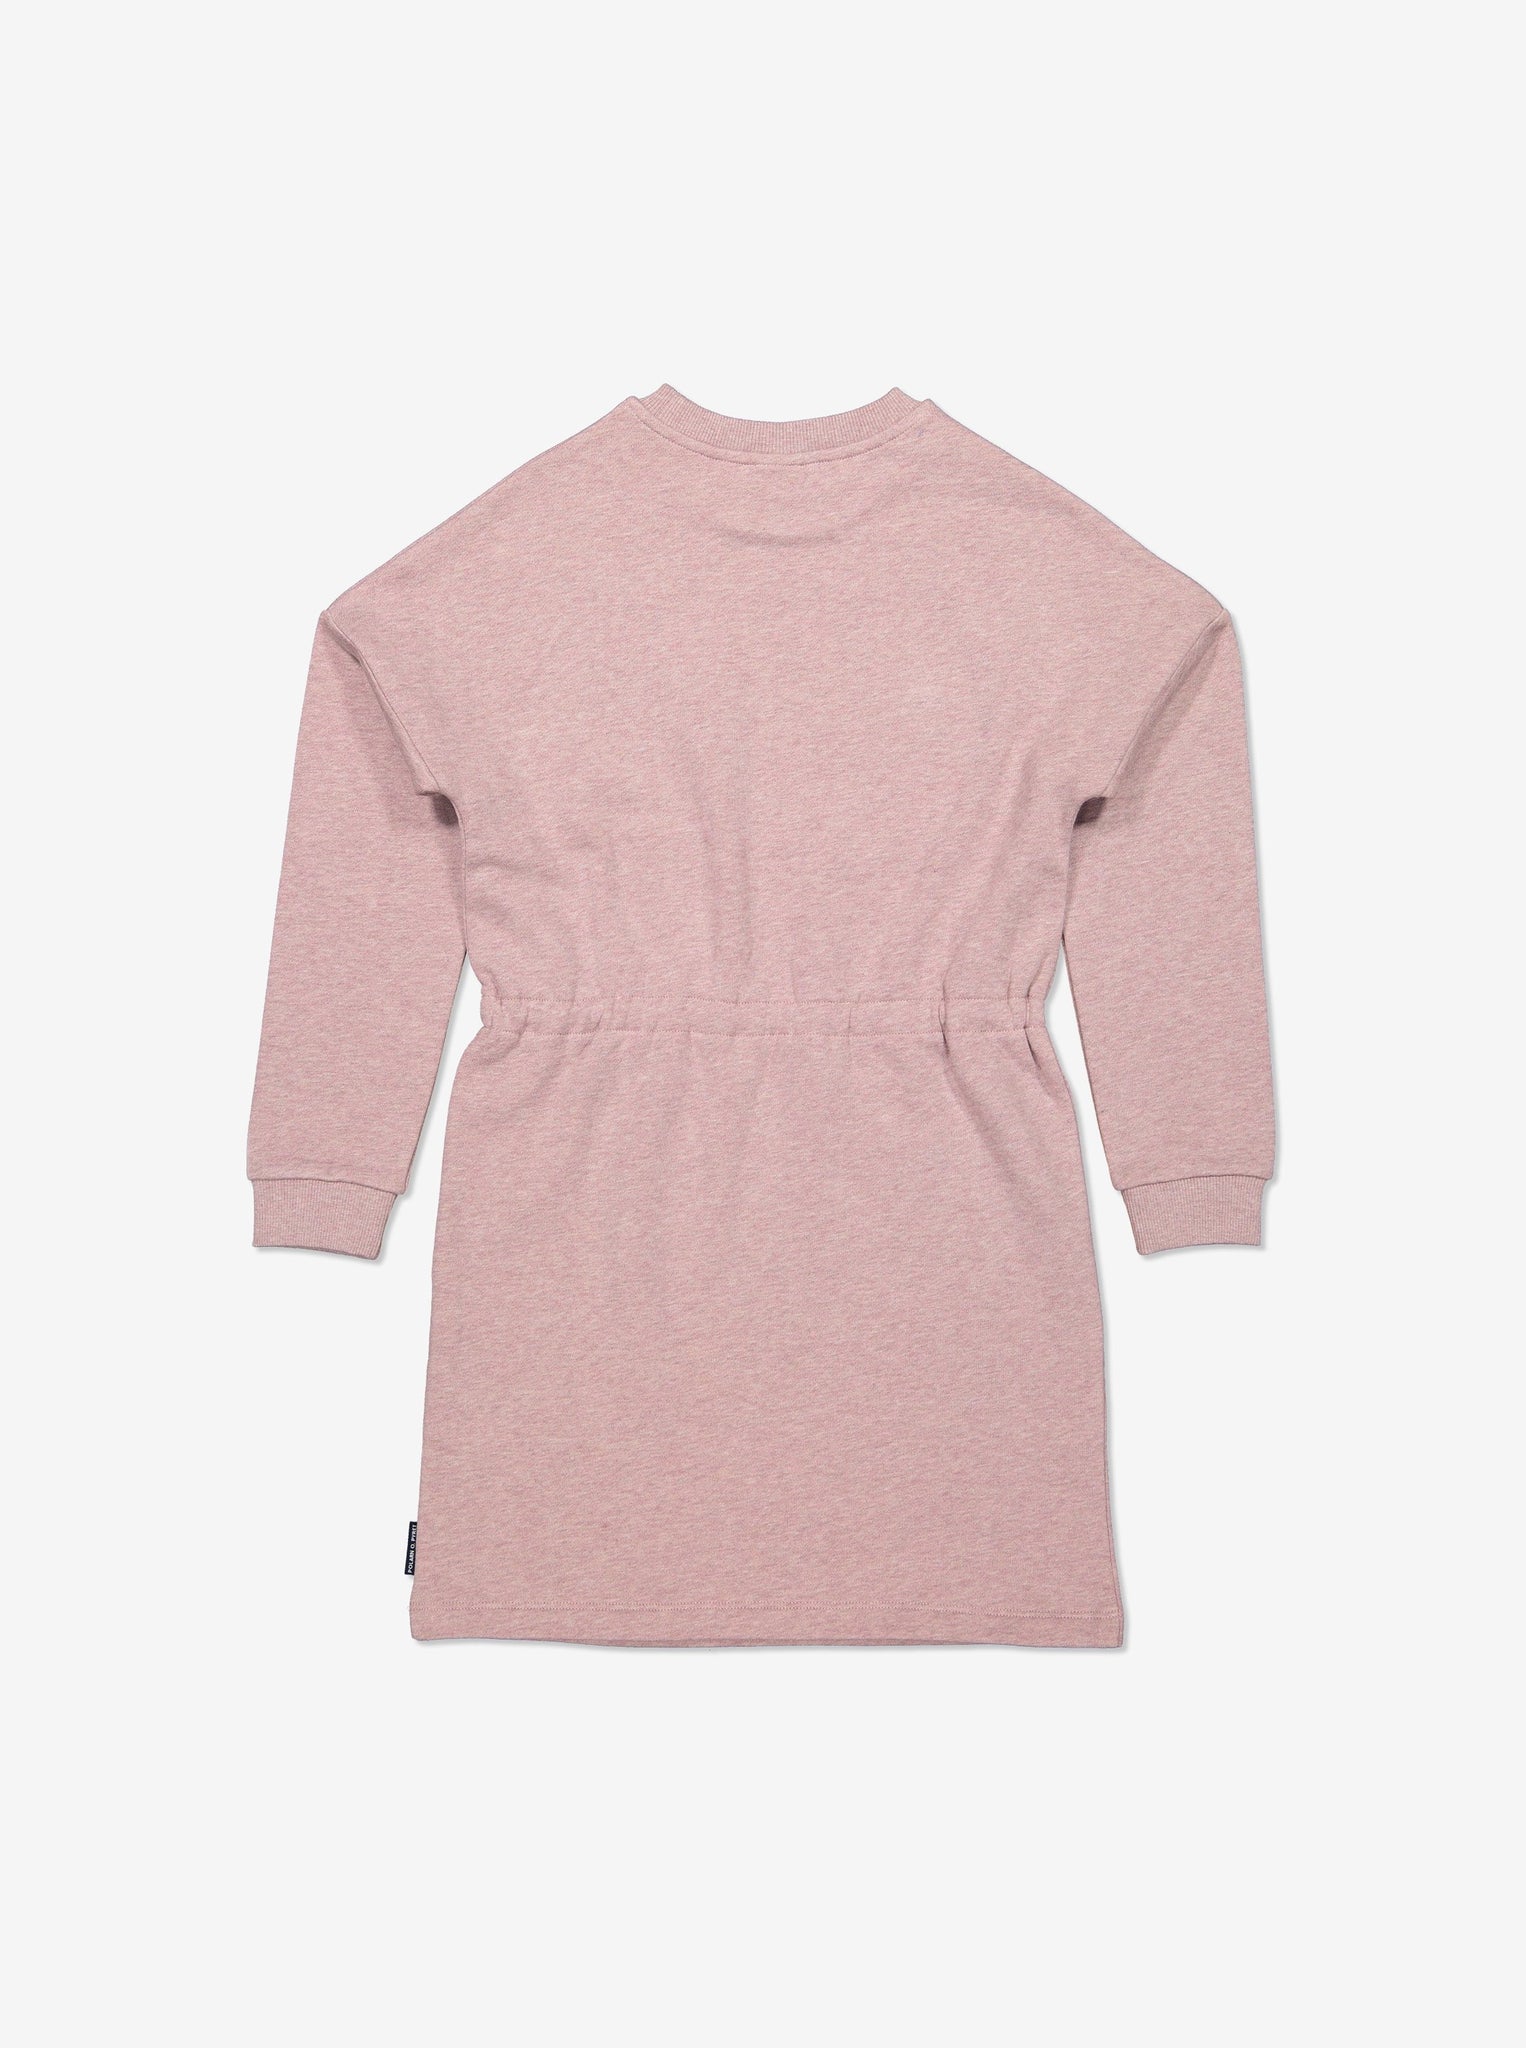 Girls Pink Organic Sweatshirt Dress